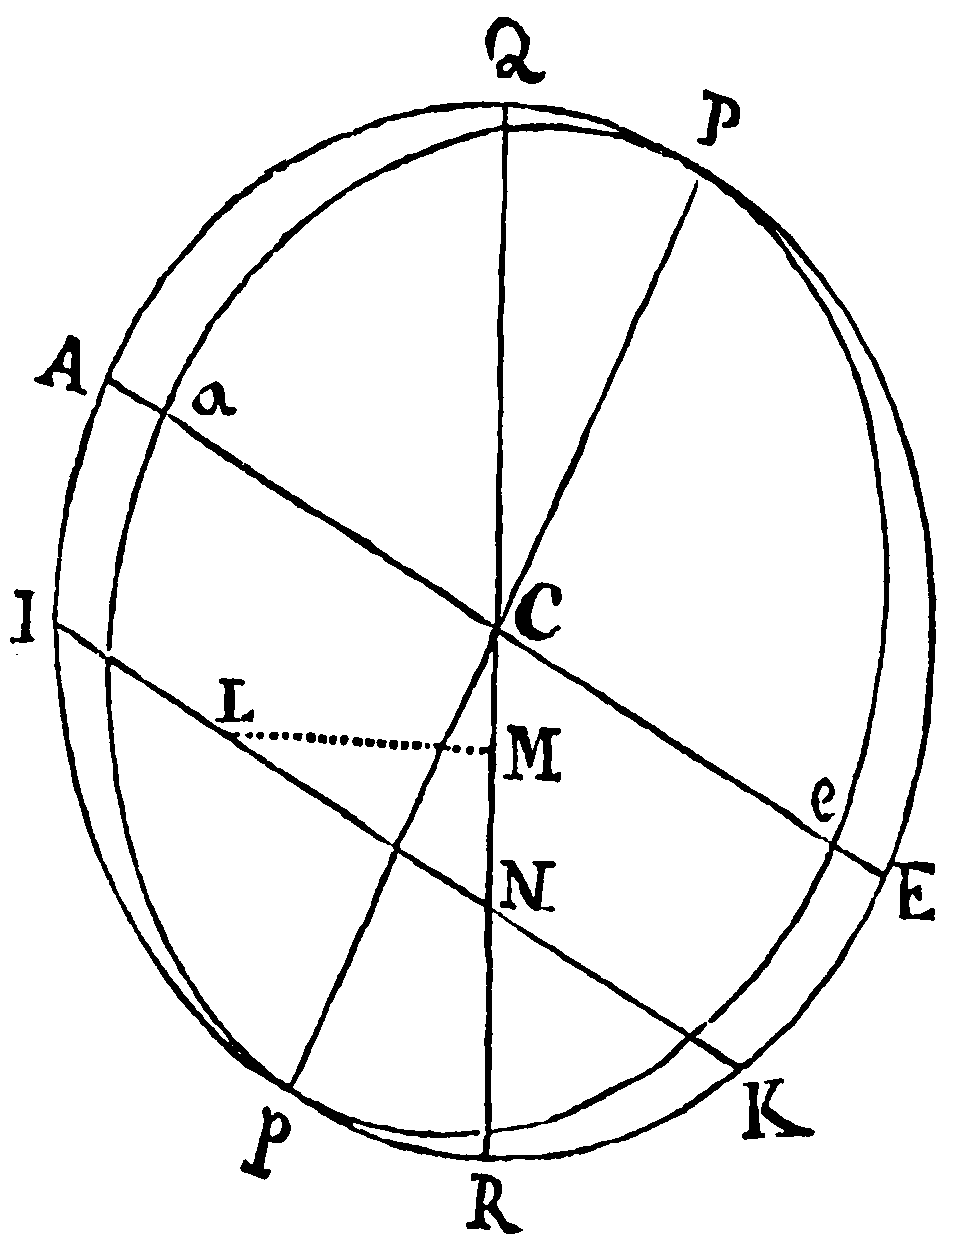 Figure for Prop. XXXIX.